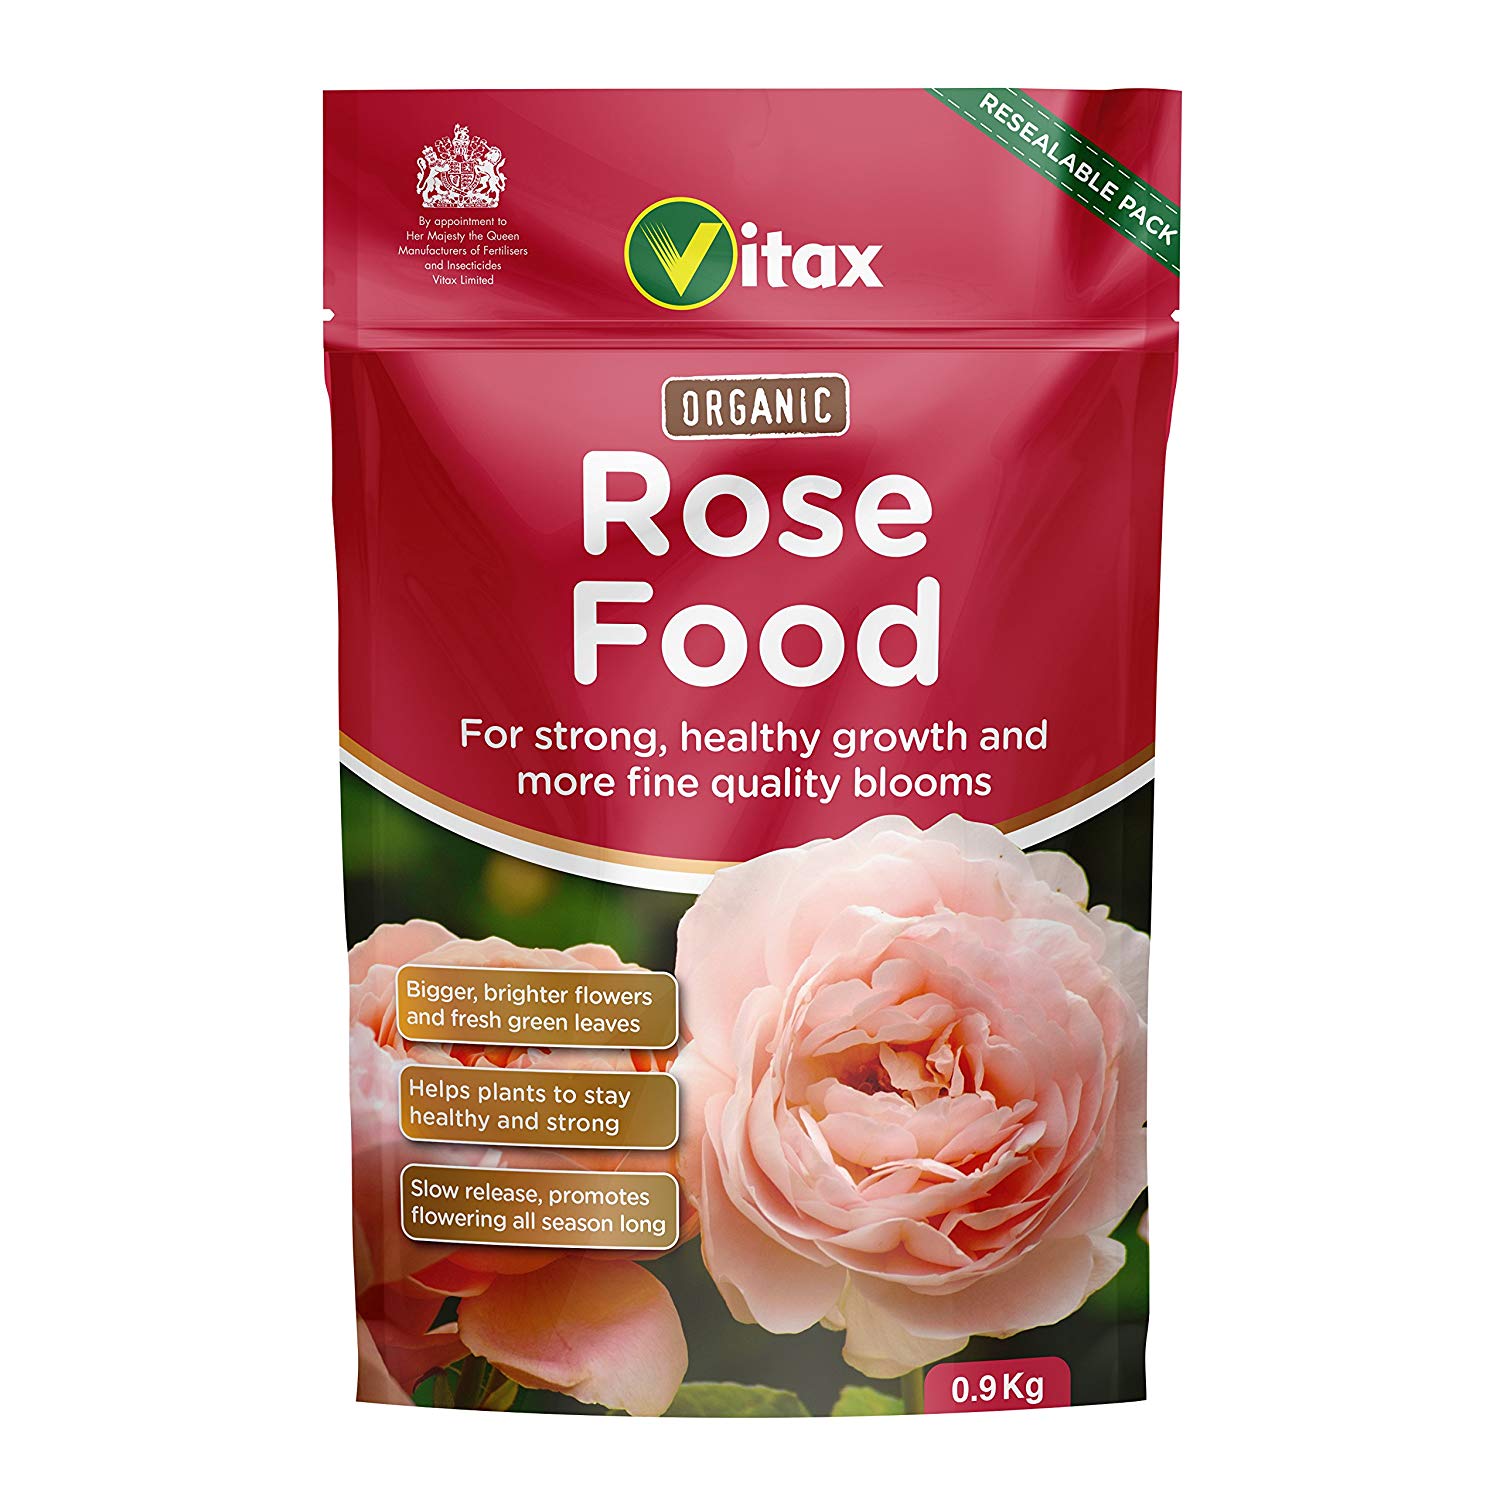 Vitax Organic Rose Food Pouch - 0.9Kg